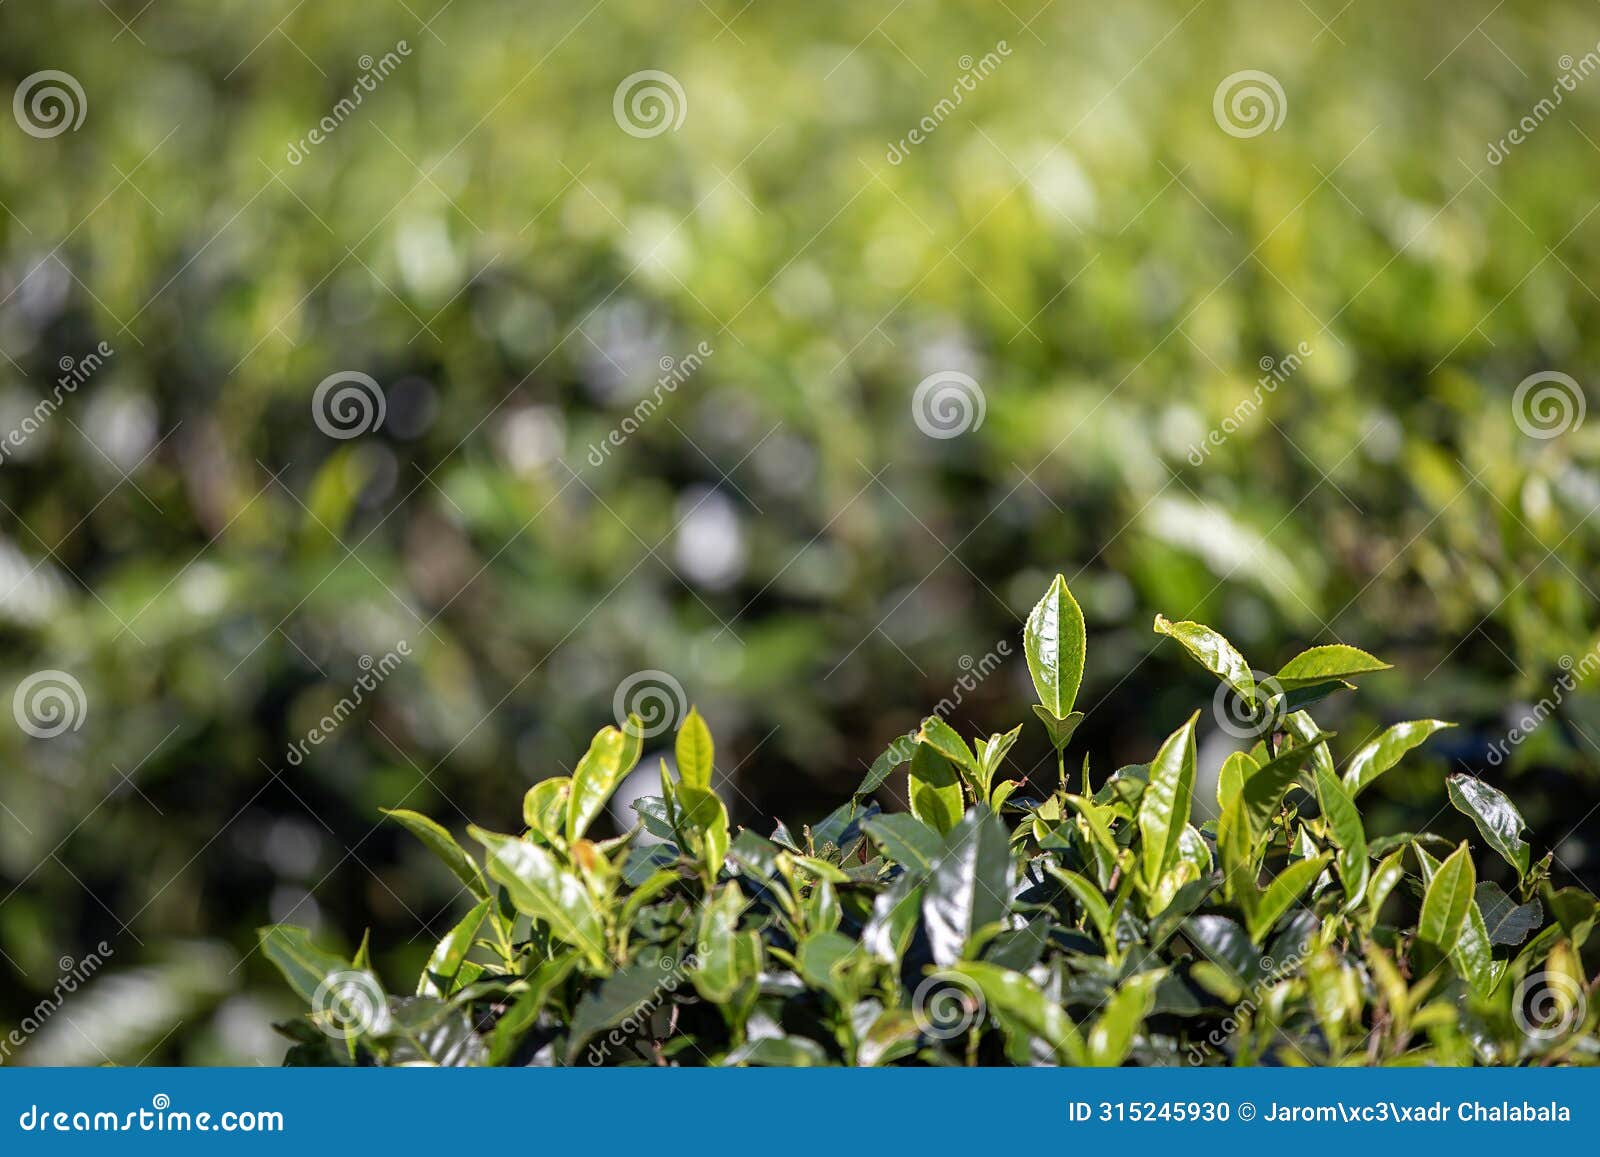 selective focus on tea leaf in tea plantation